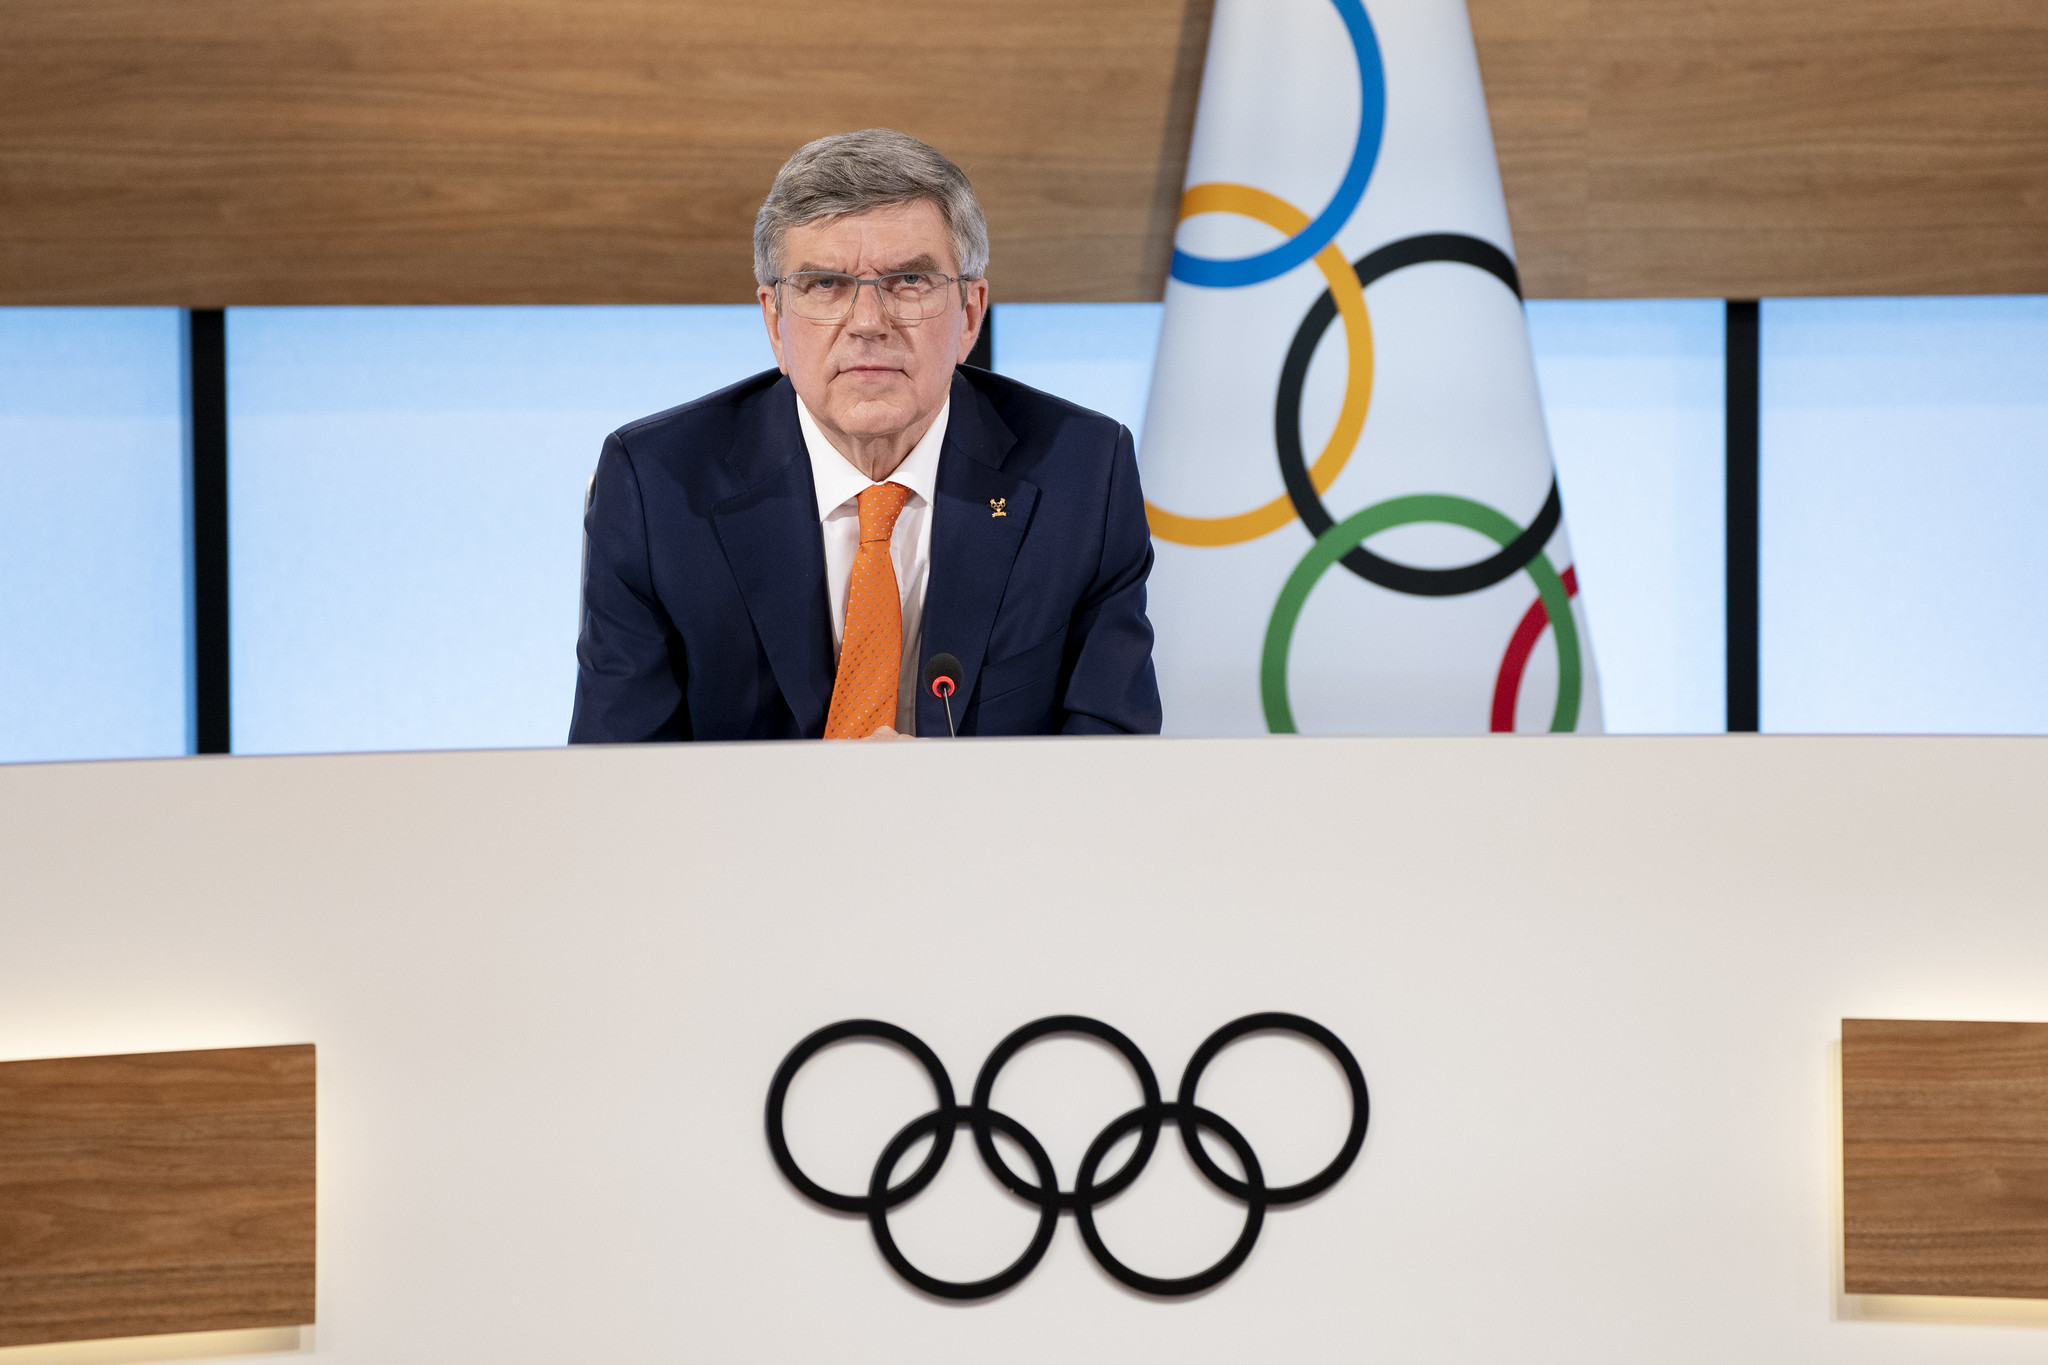 IOC President Thomas Bach will chair the meeting, to be held virtually due to the coronavirus pandemic ©IOC